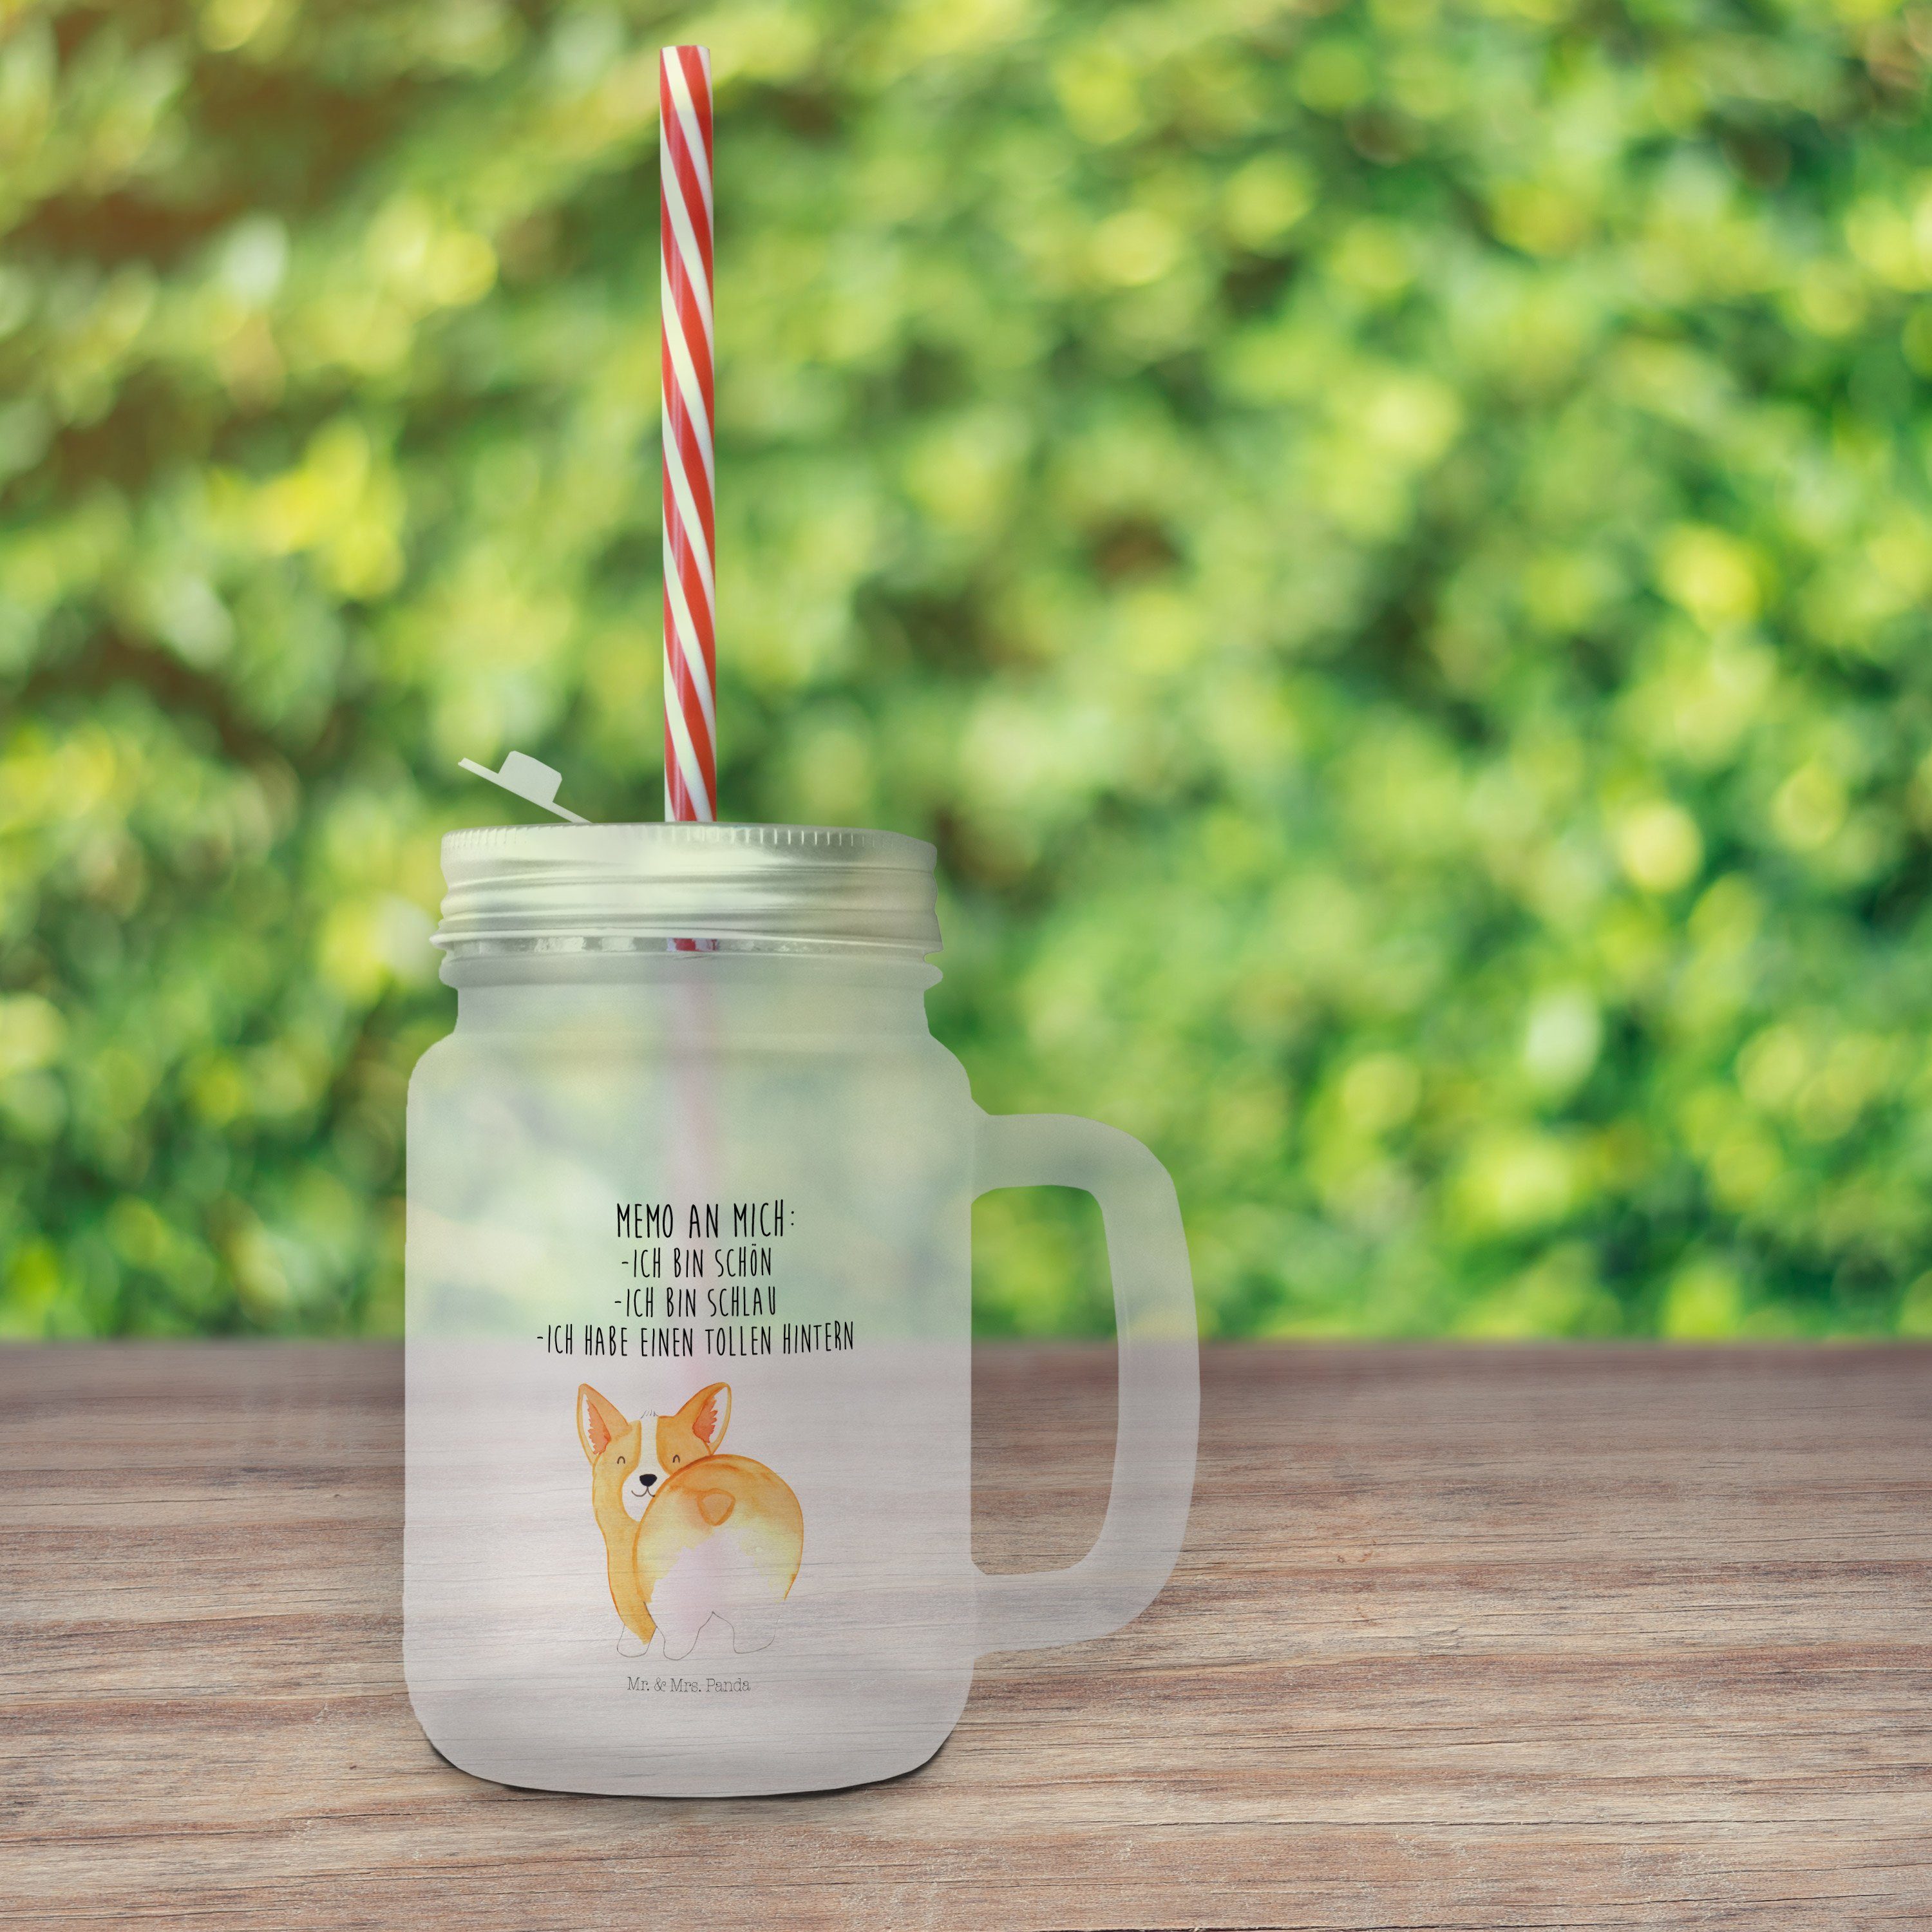 Mr. & Mrs. Panda Glas Corgie Po - Transparent - Geschenk, Hund, Hunderasse, Mason Jar Trink, Premium Glas